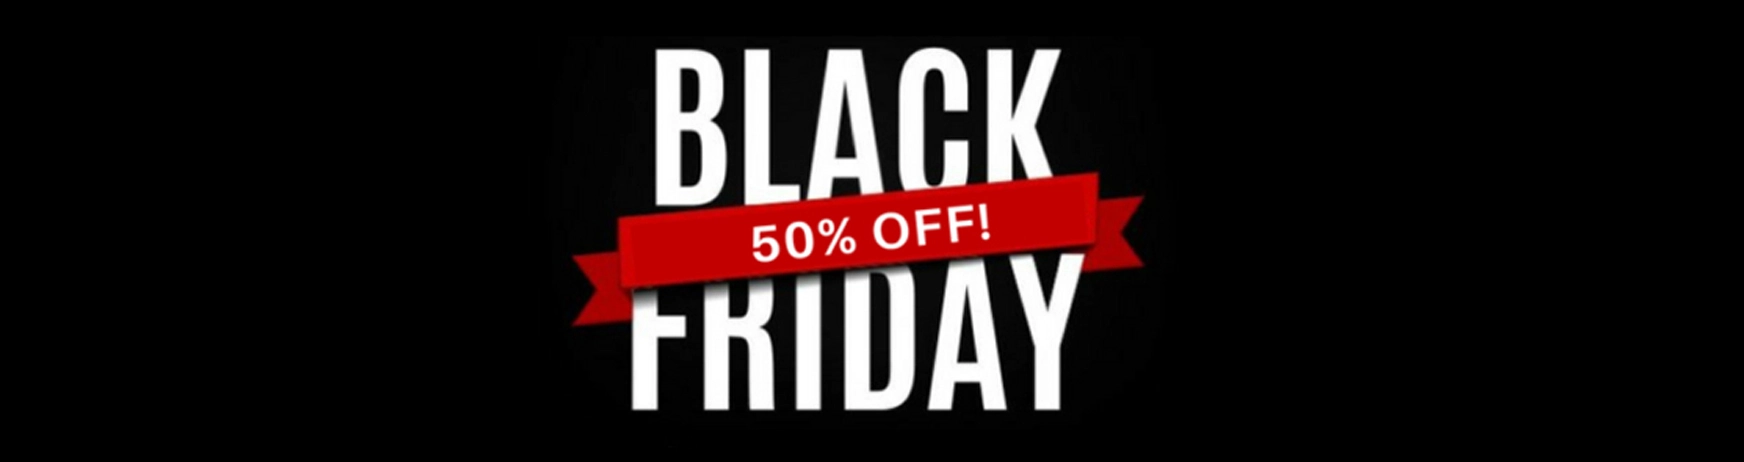 Black Friday -50% SALE